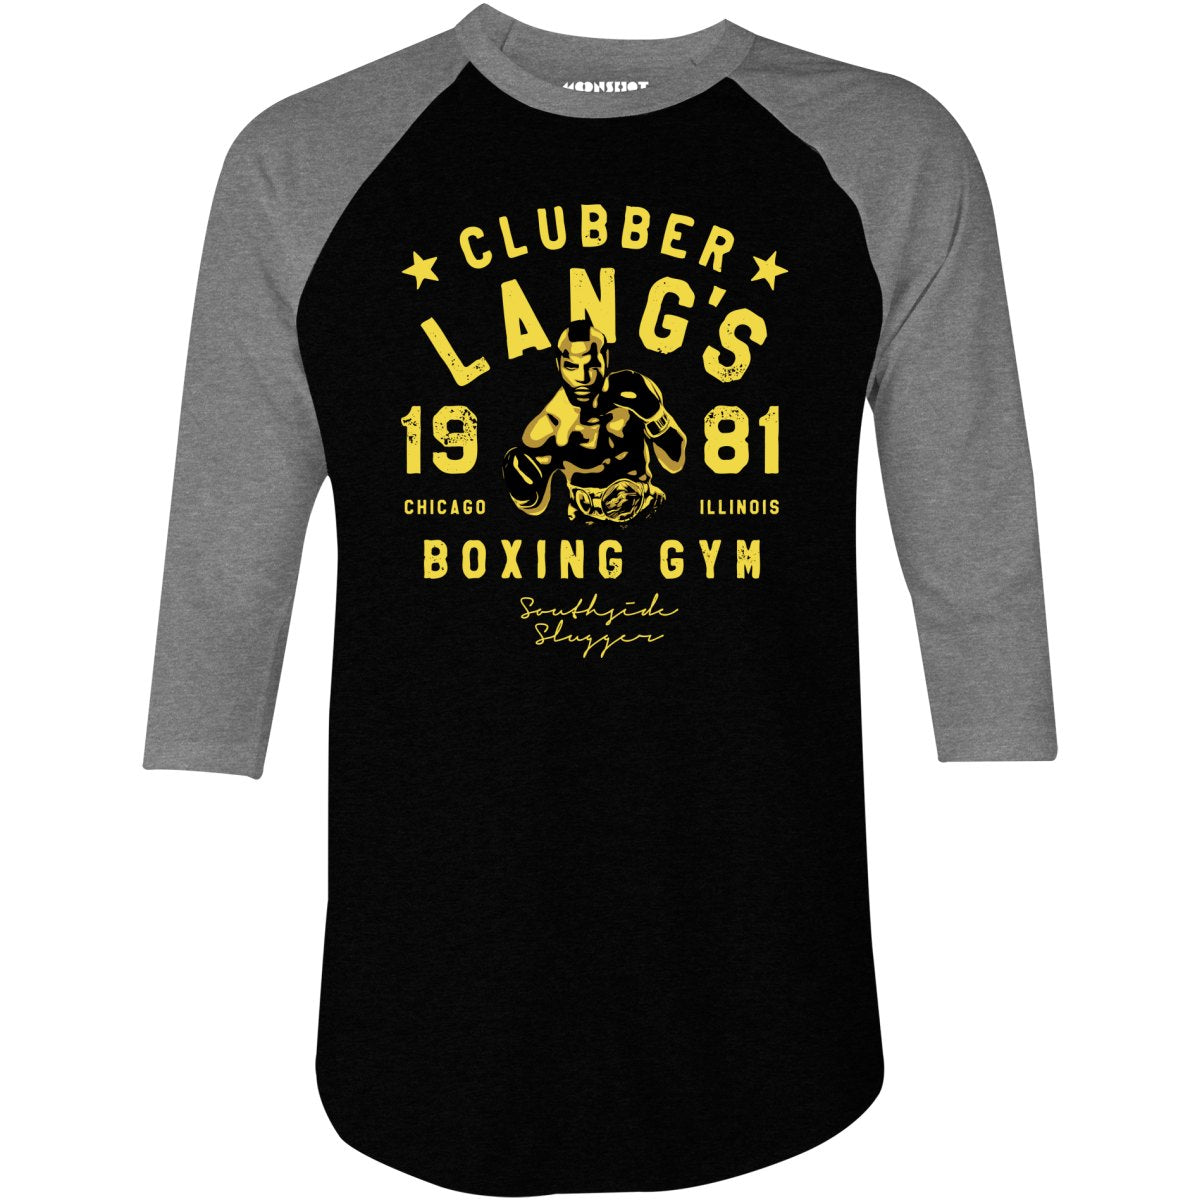 Clubber Lang's Boxing Gym - 3/4 Sleeve Raglan T-Shirt